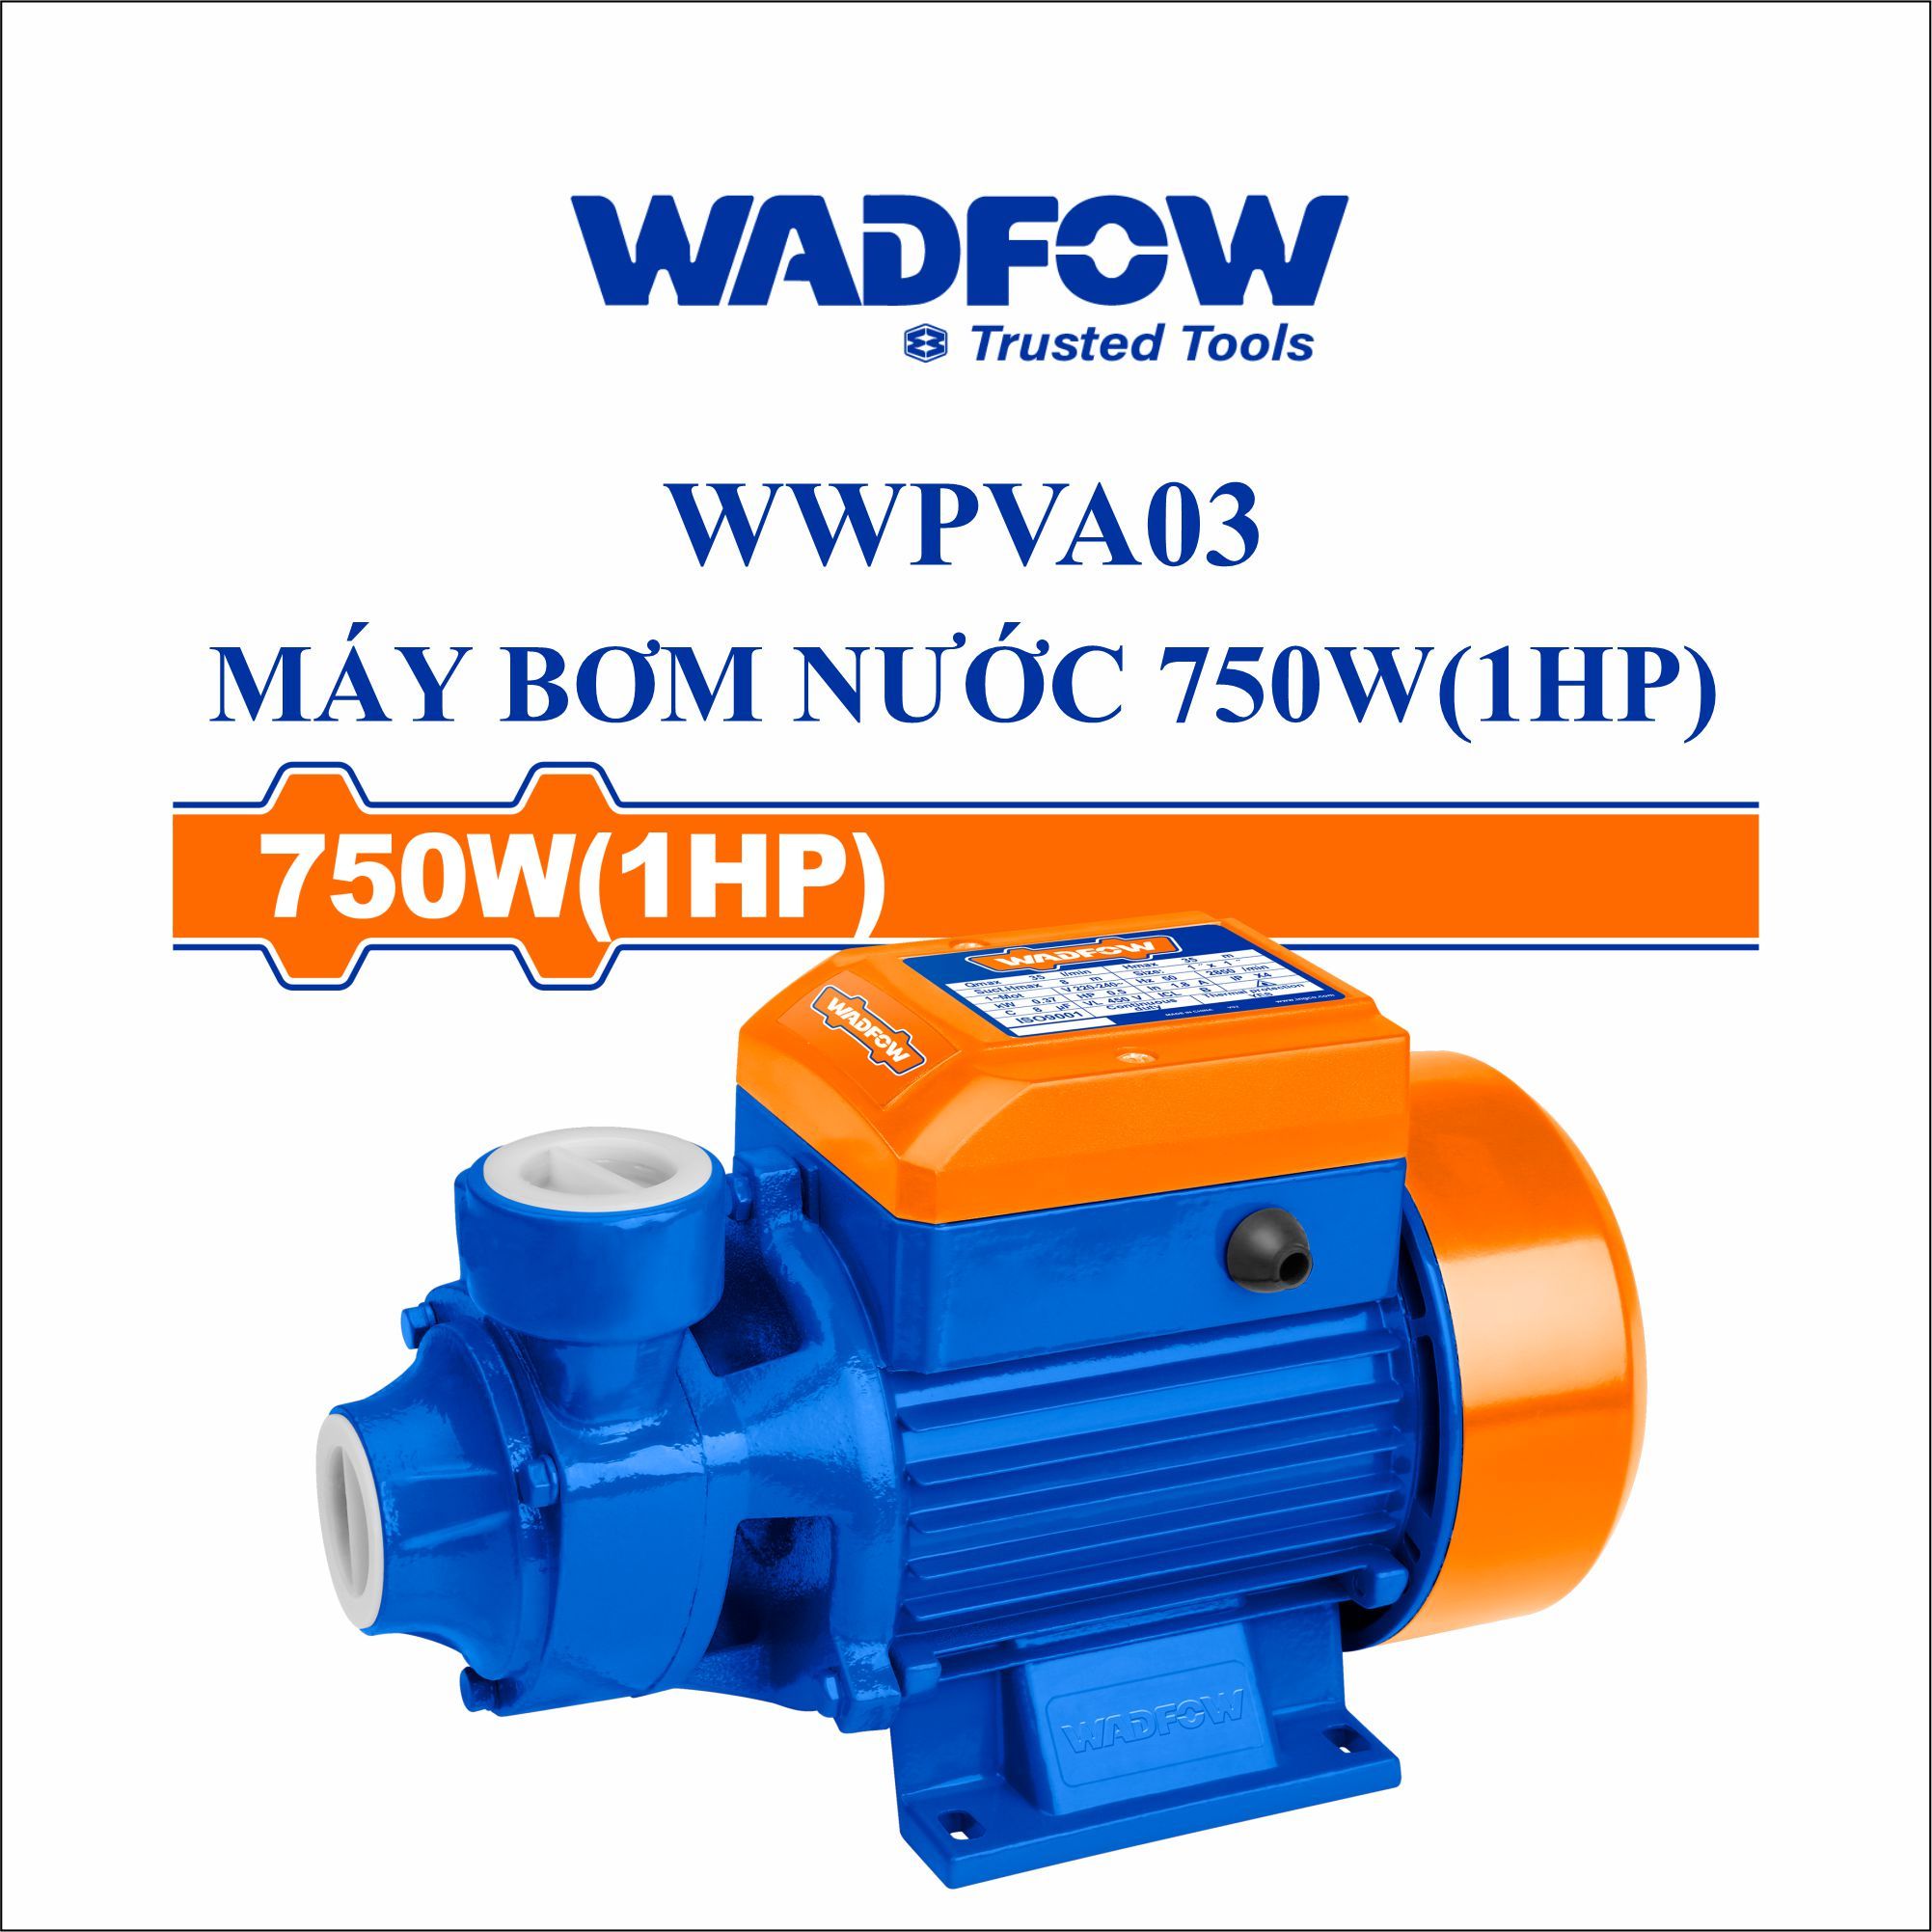  Máy bơm nước 750W(1HP) WADFOW WWPVA03 